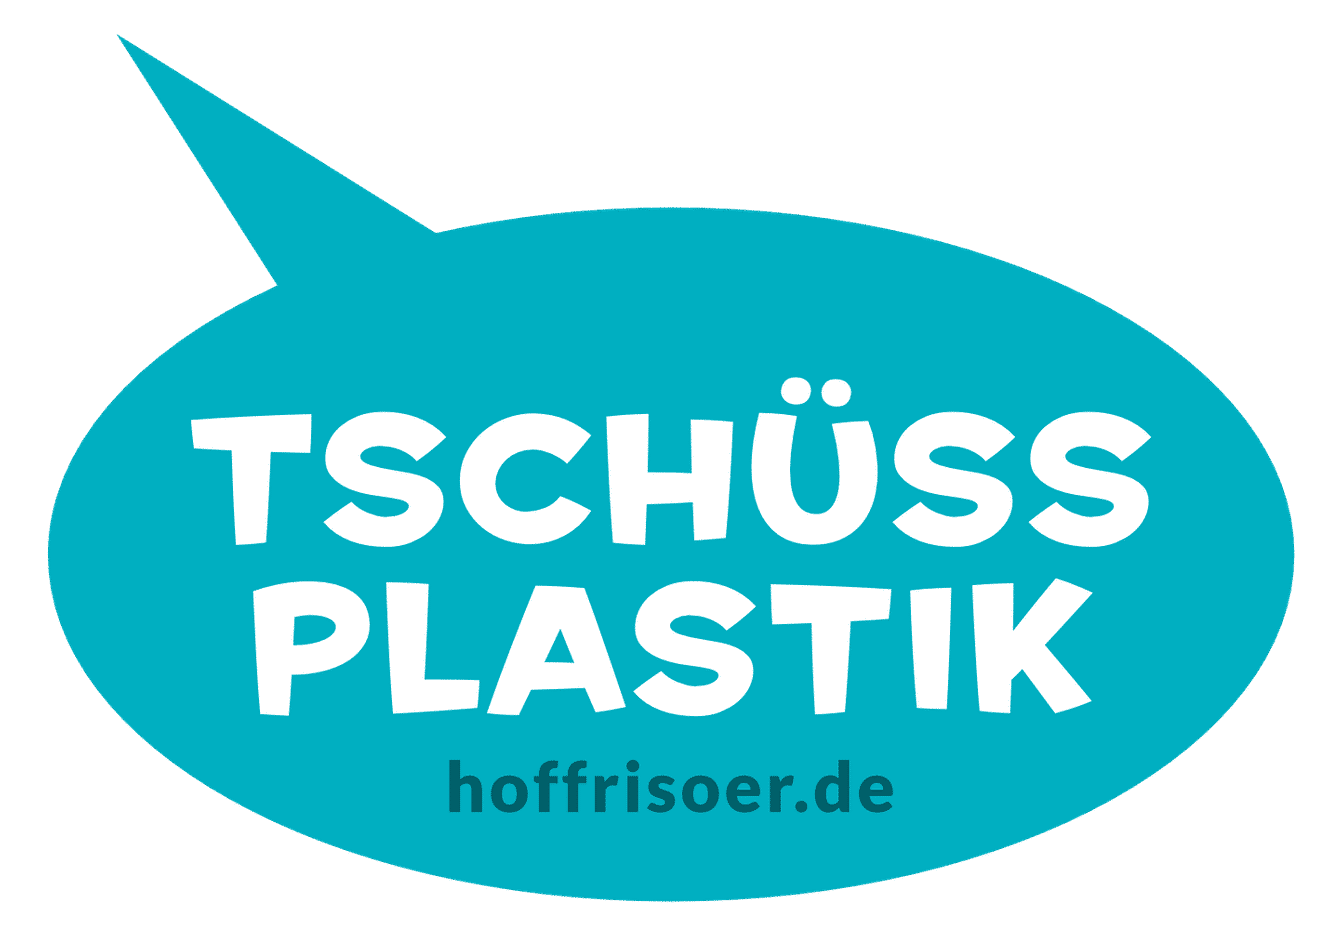 Tschüss Plastik: Hof Frisör Hat Da Was Passendes Im Sortiment …